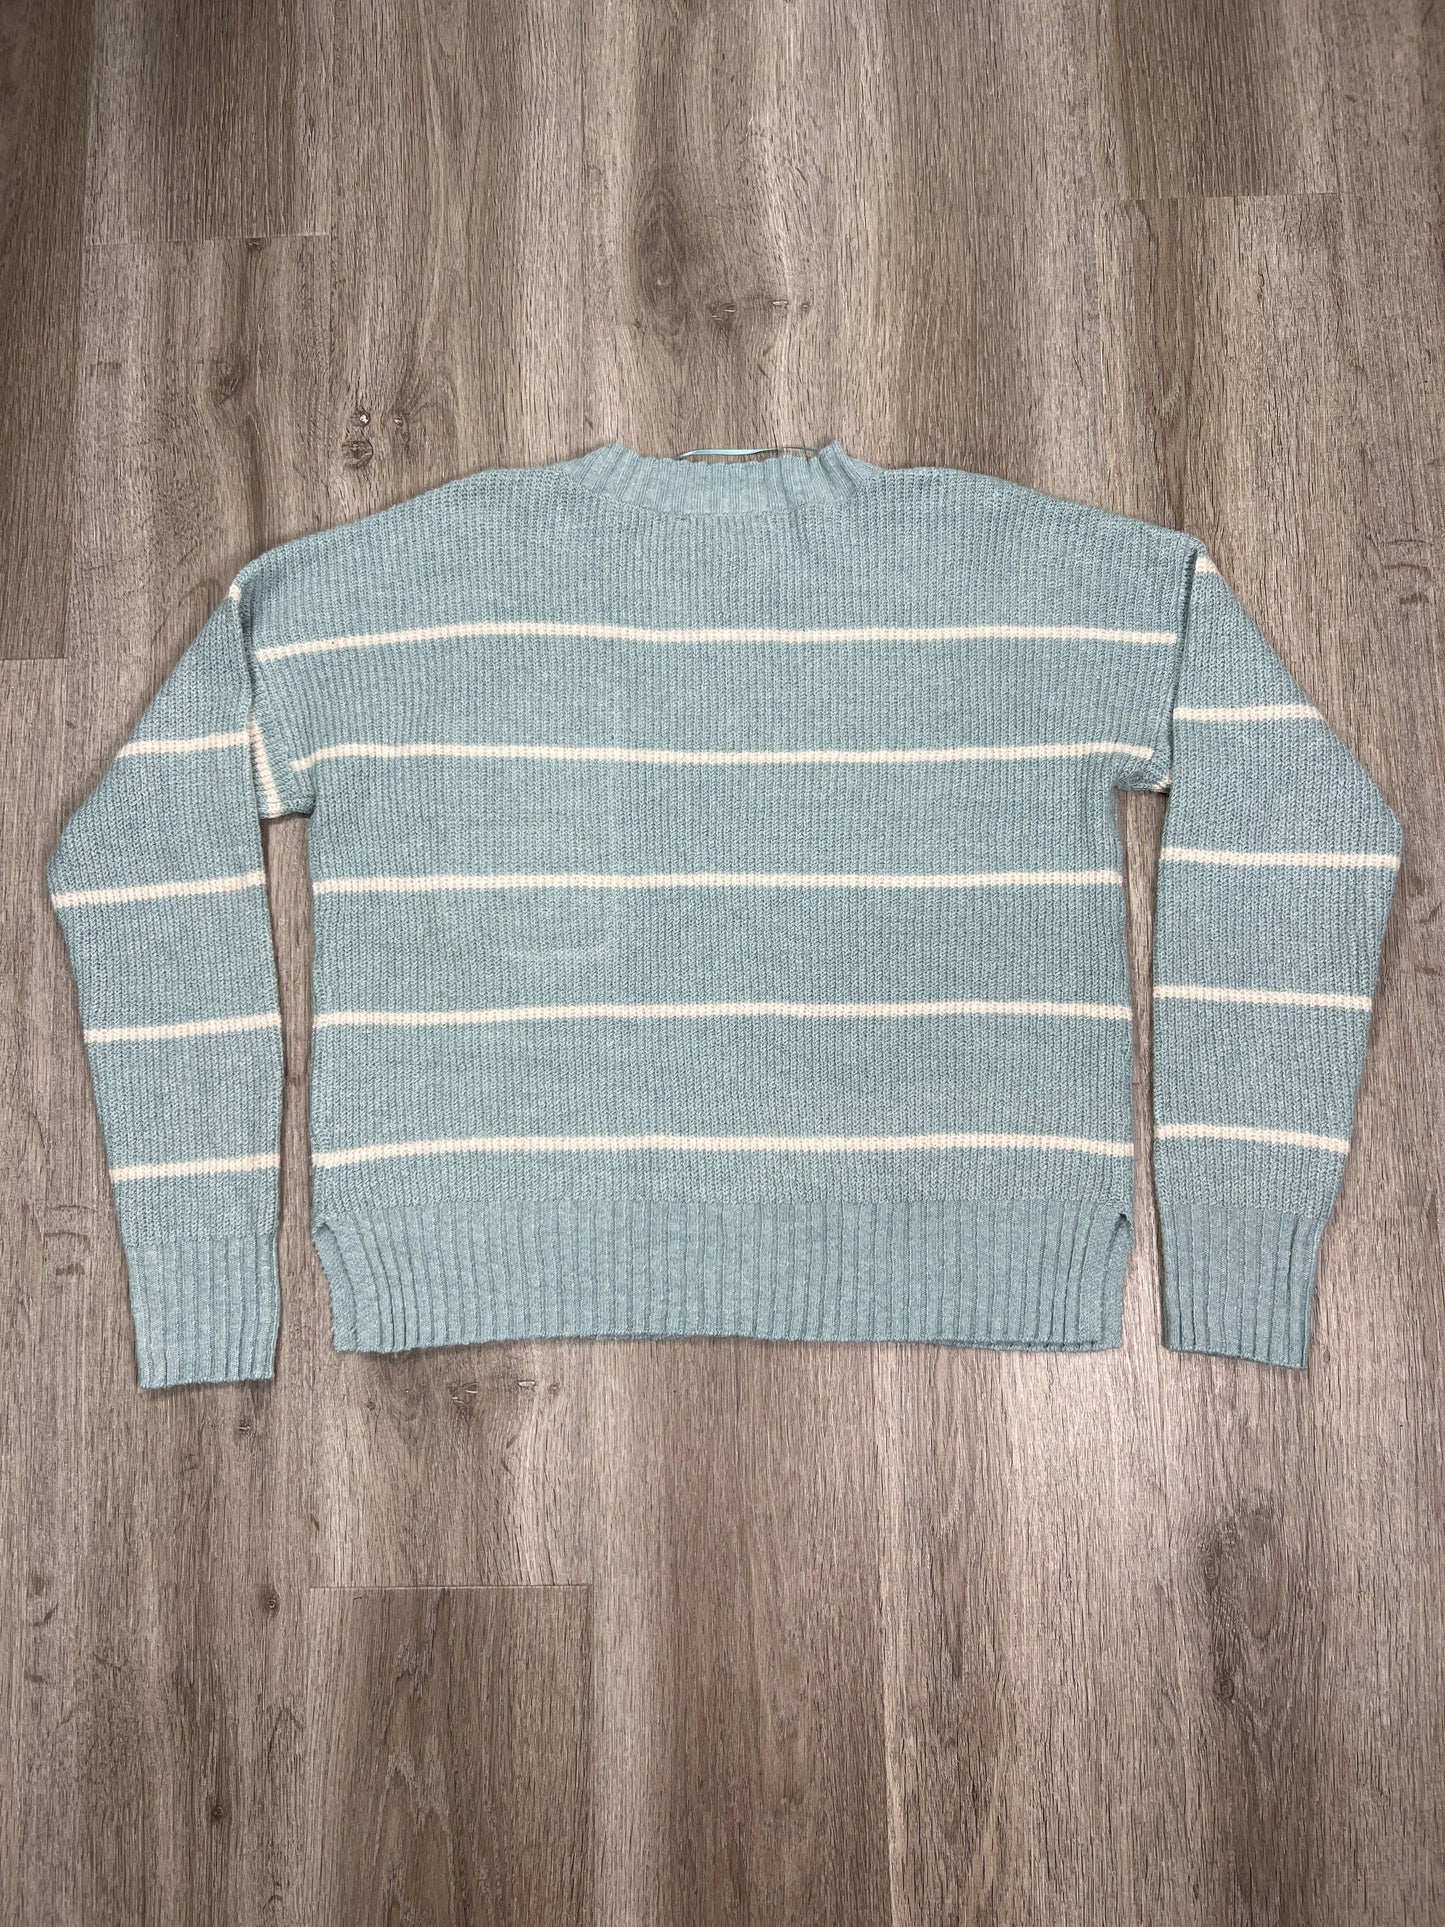 Blue & White Sweater Pink Republic, Size L